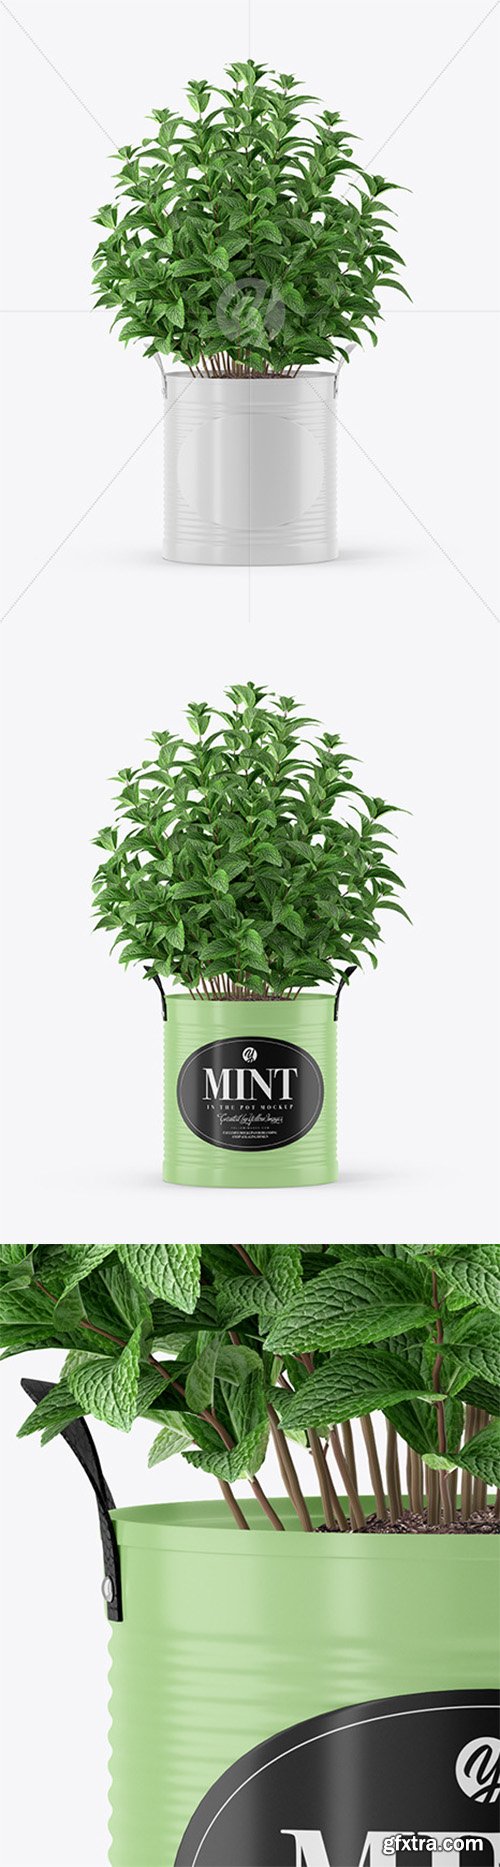 Mint in The Pot Mockup 66222